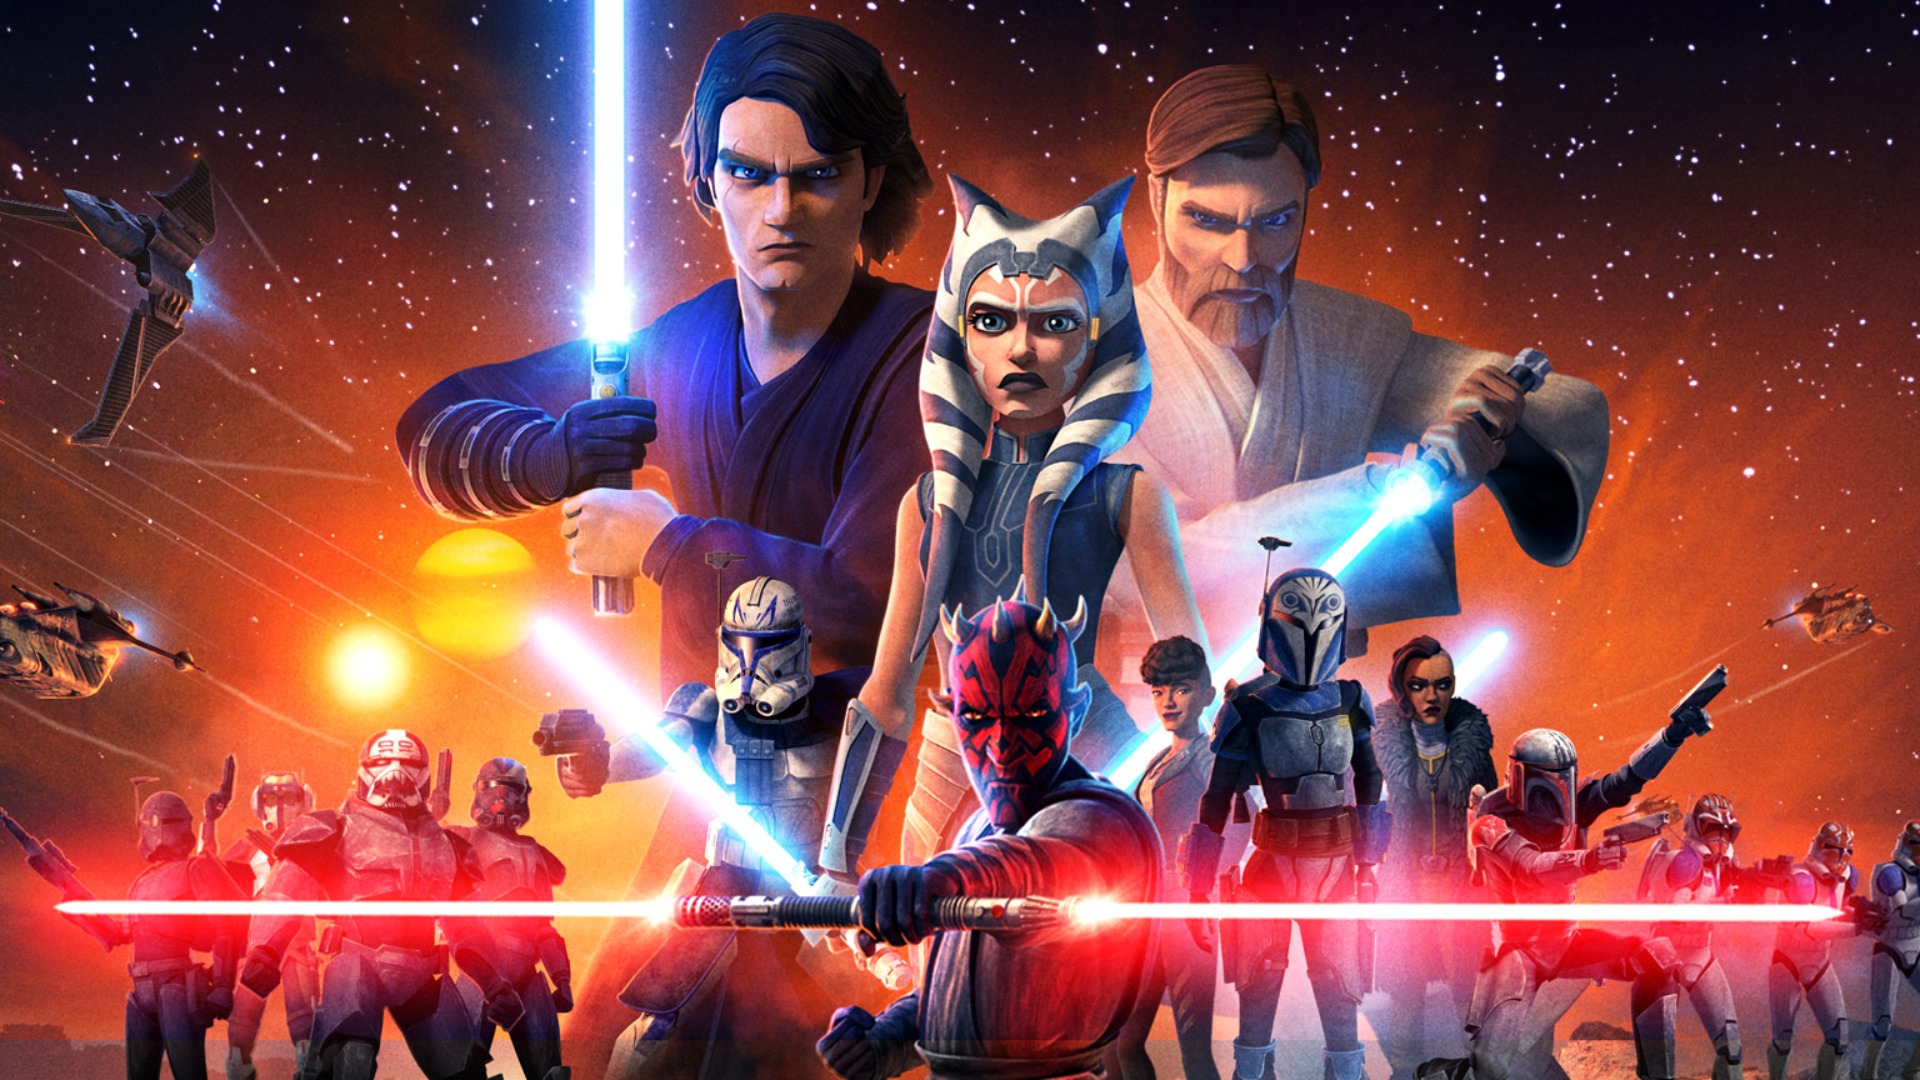 LEGO Star Wars III: The Clone Wars (Xbox 360) Full HD - 1080 